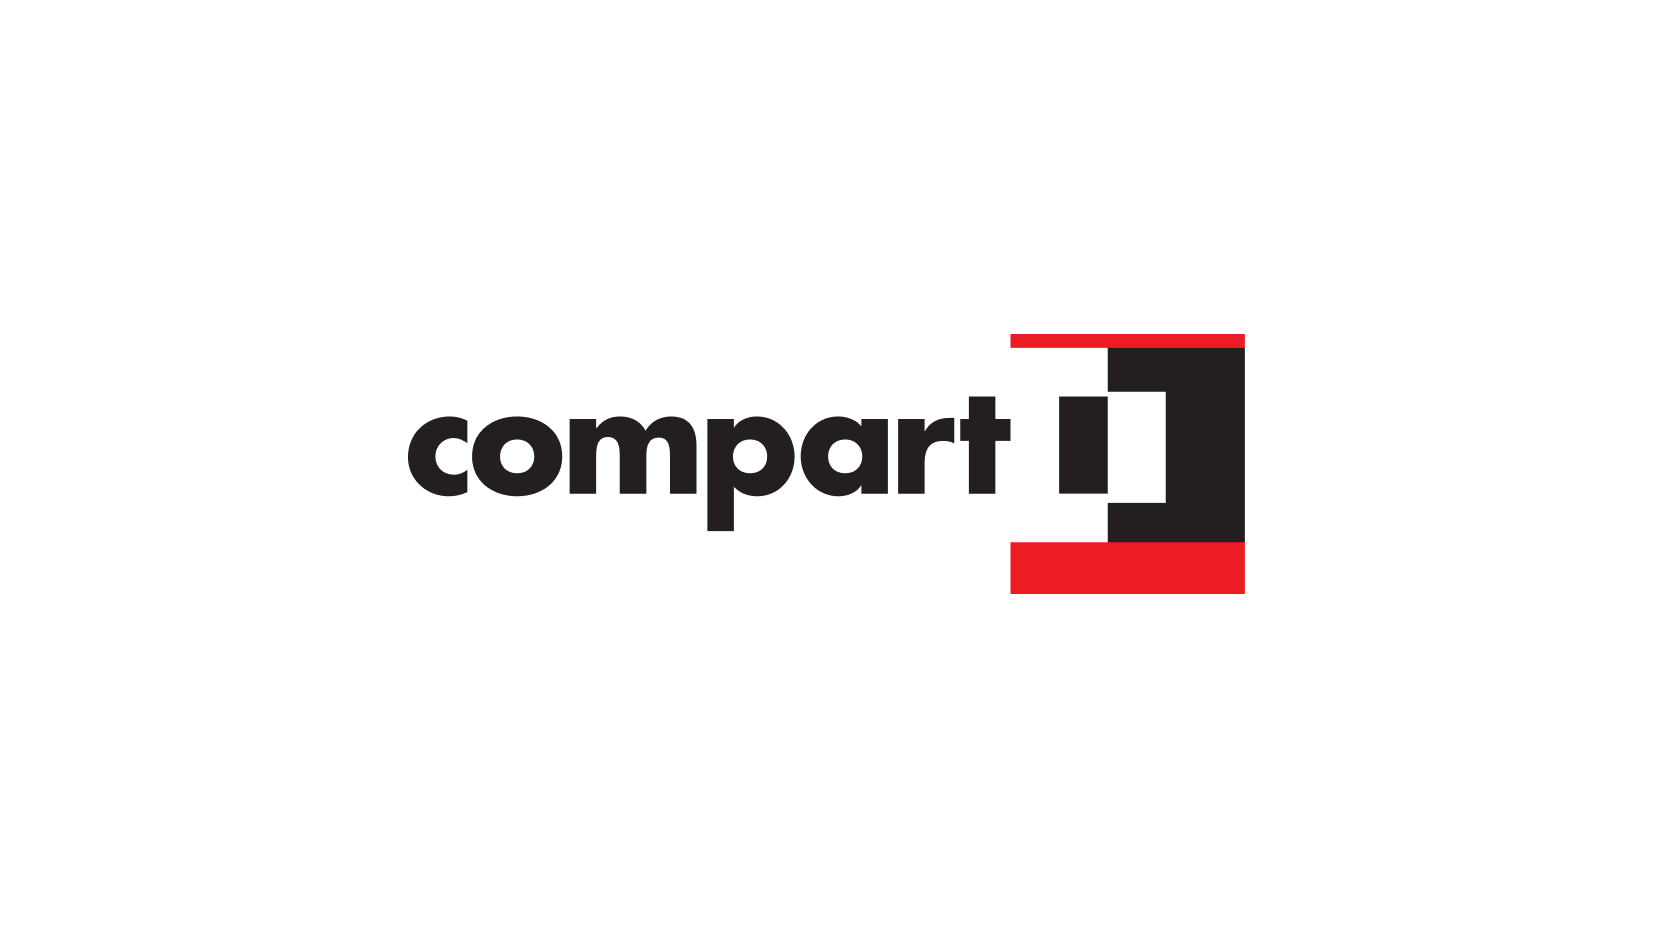 Tech & Product DD | Acquisition | Code & Co. advises Bregal Unternehmerkapital on Compart AG